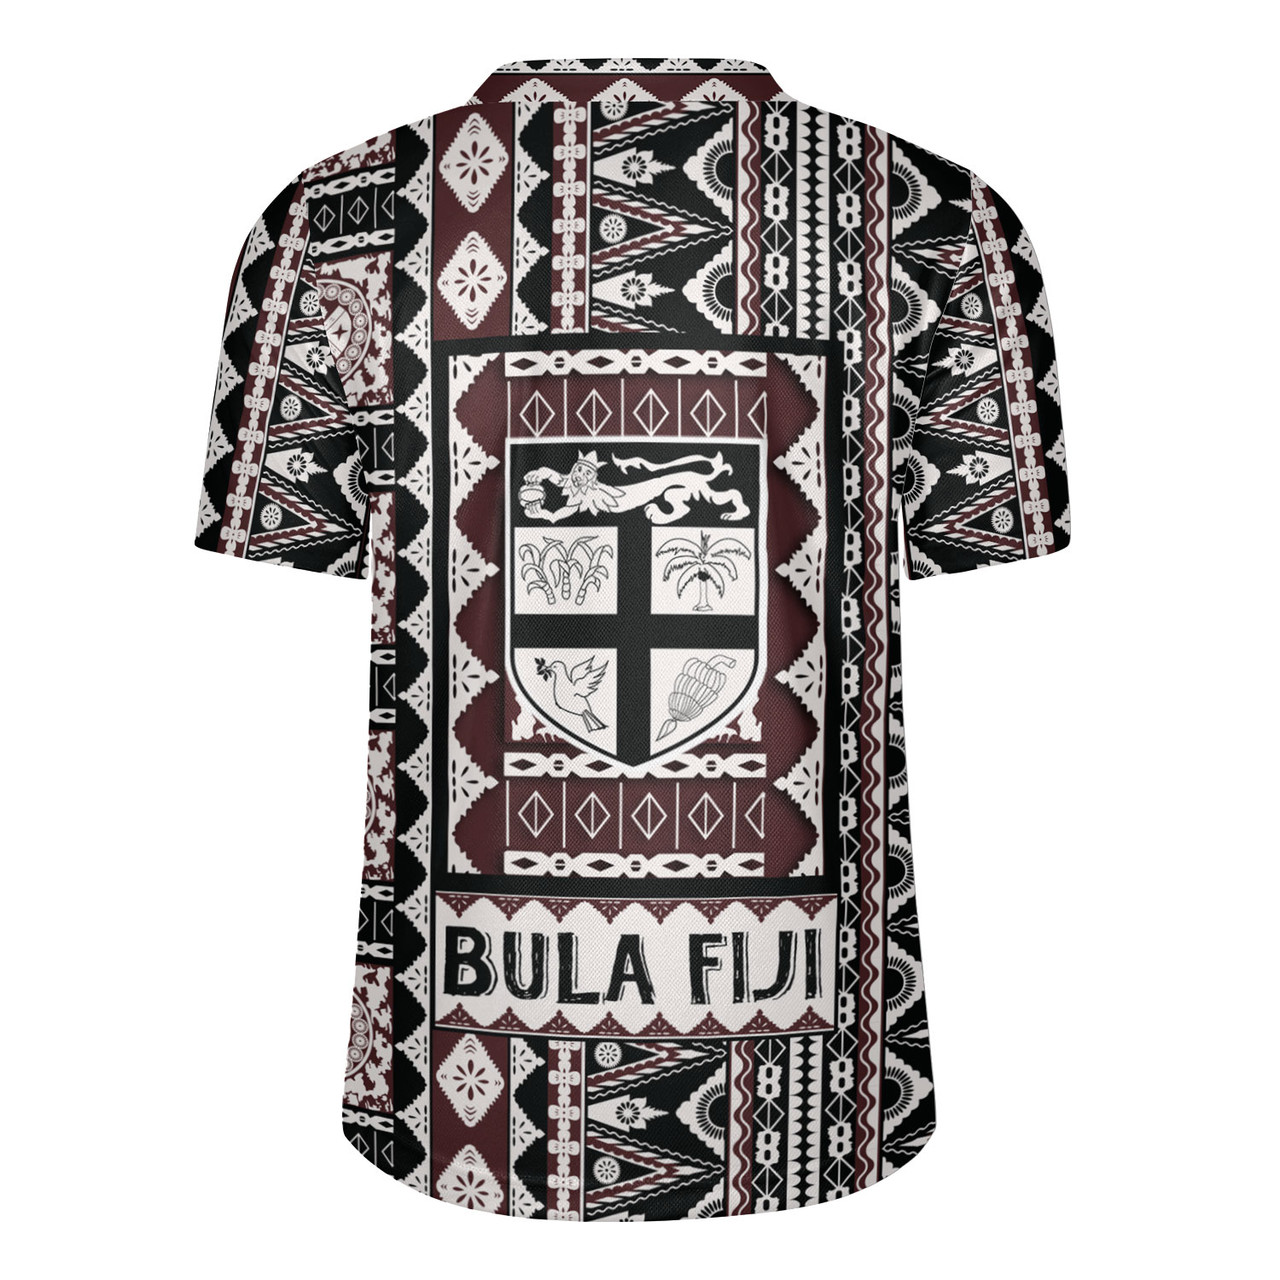 Fiji Rugby Jersey Bula Fiji Masi Motif Brown Color Design